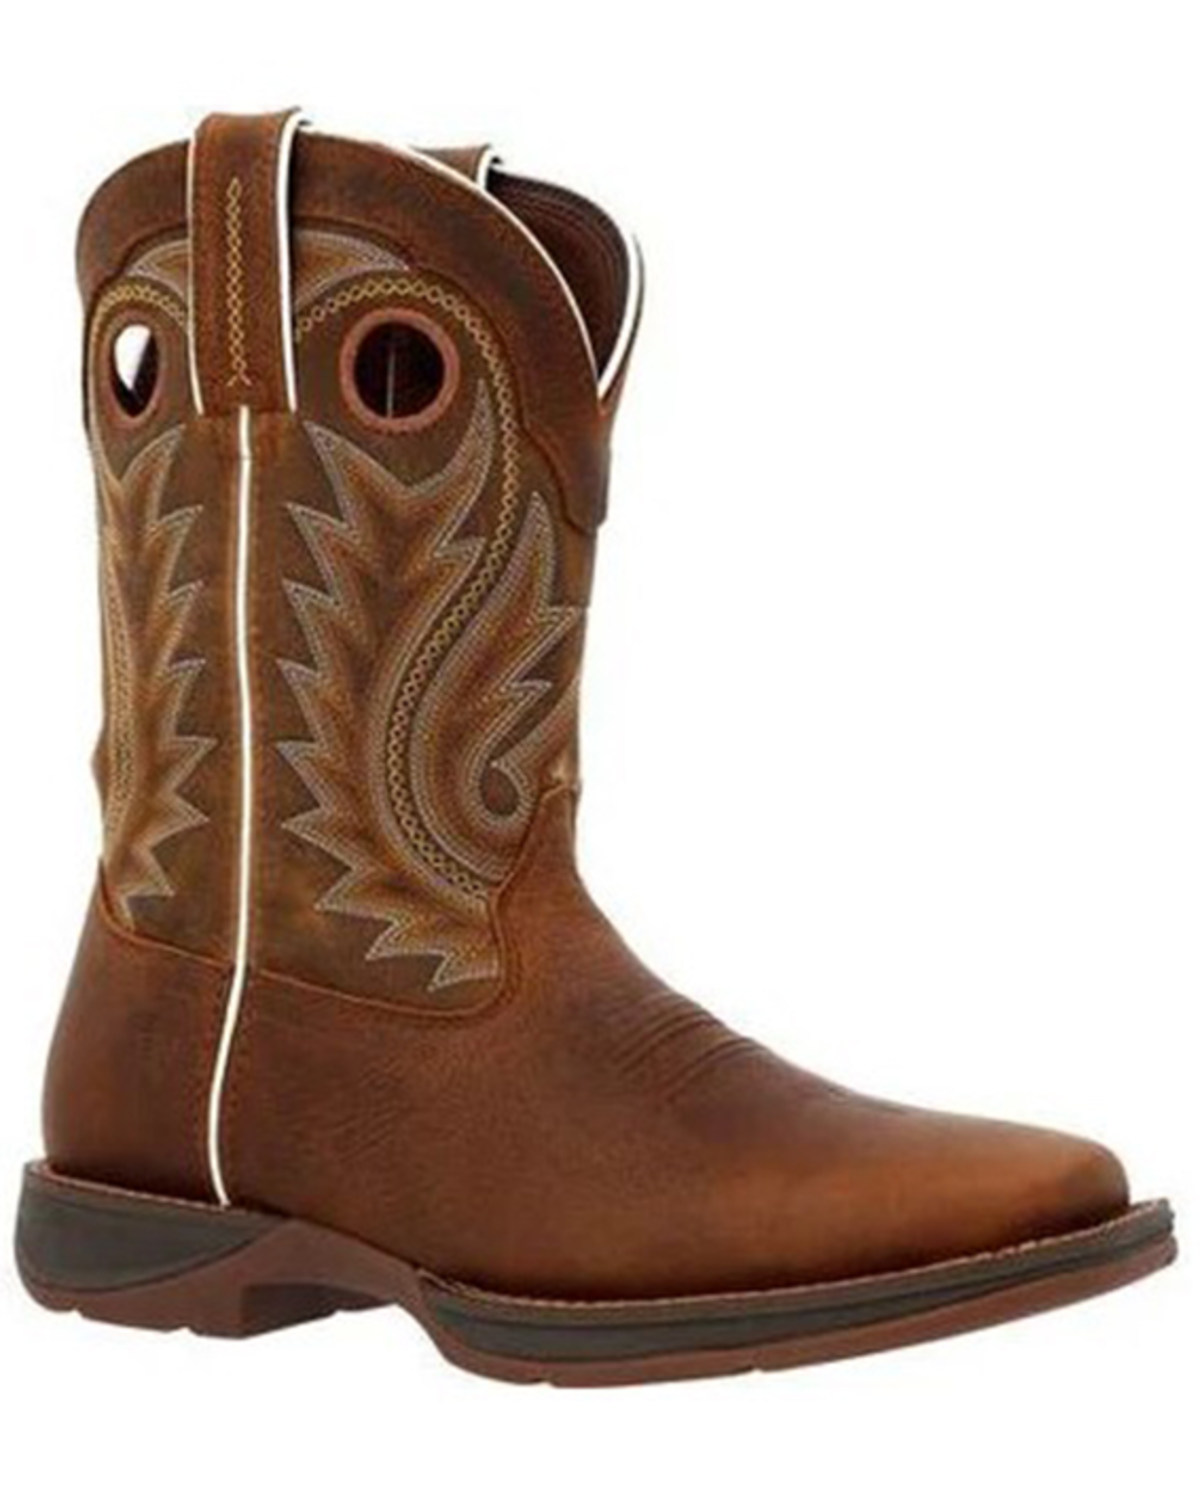 Durango Men's Rebel Chestnut Western Boots - Broad Square Toe